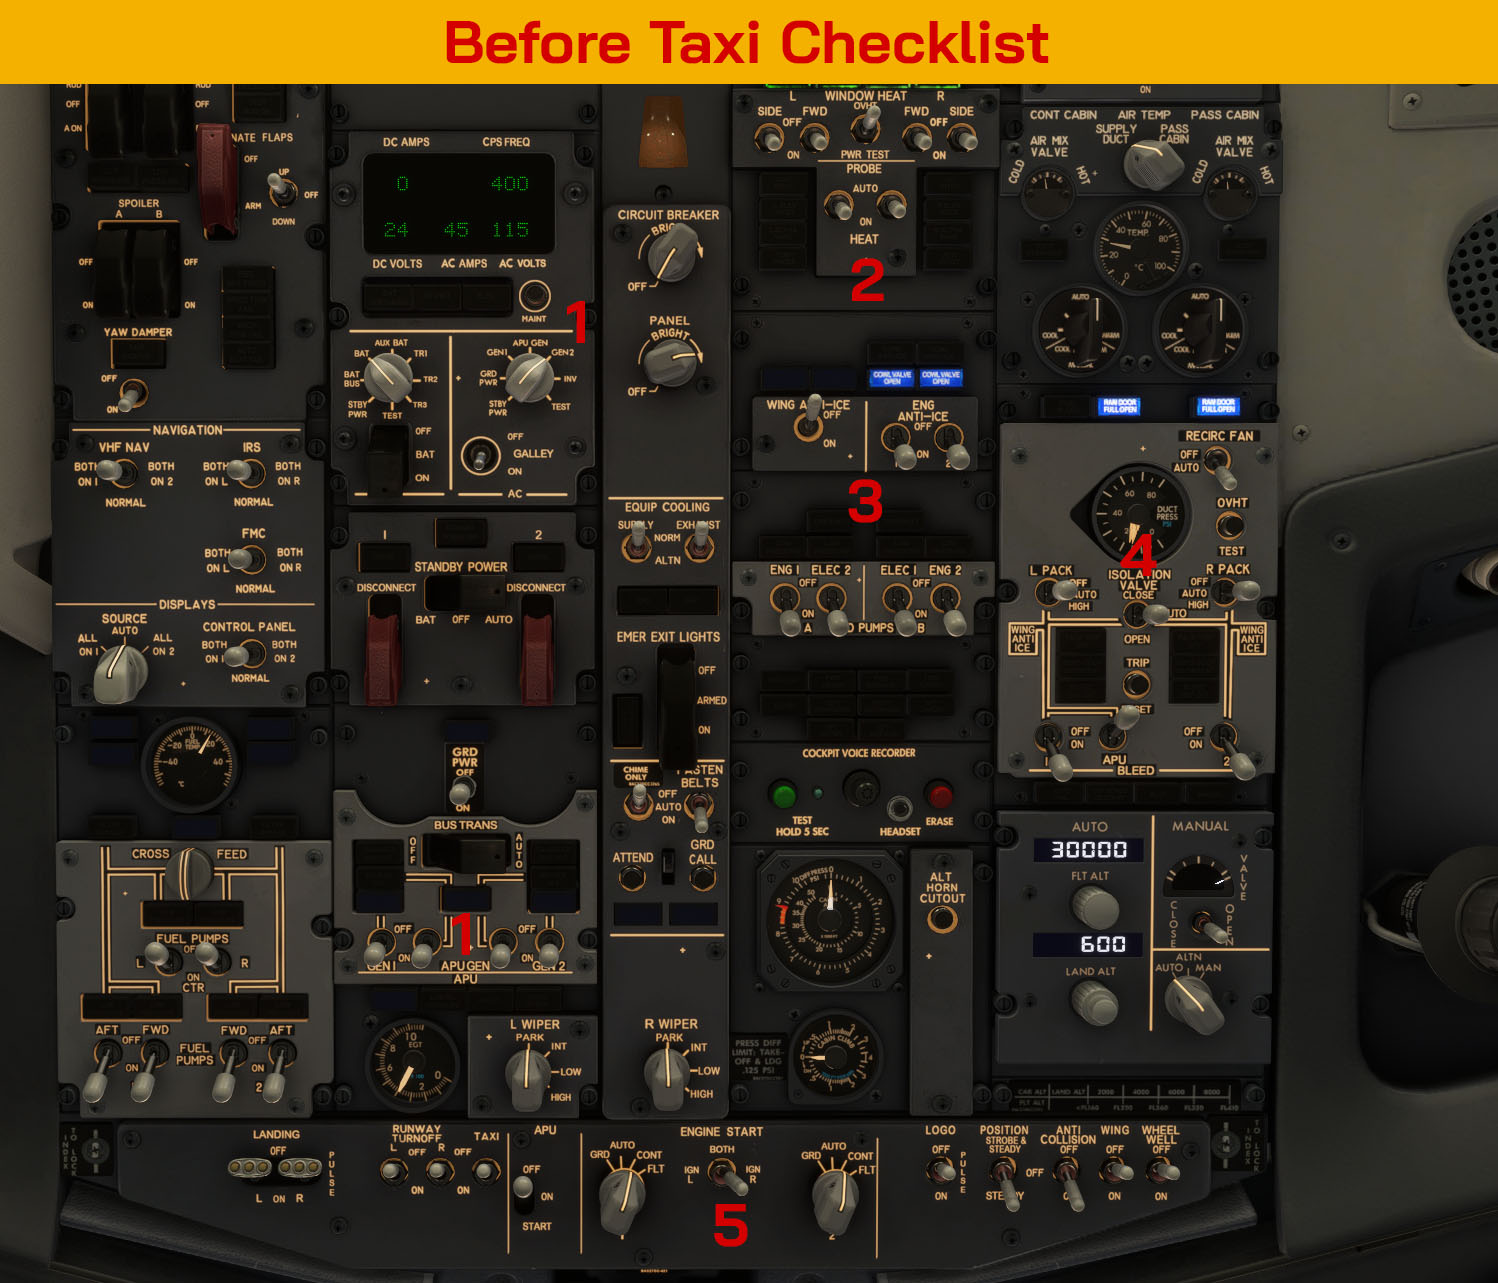 Taxi_Checklist_1